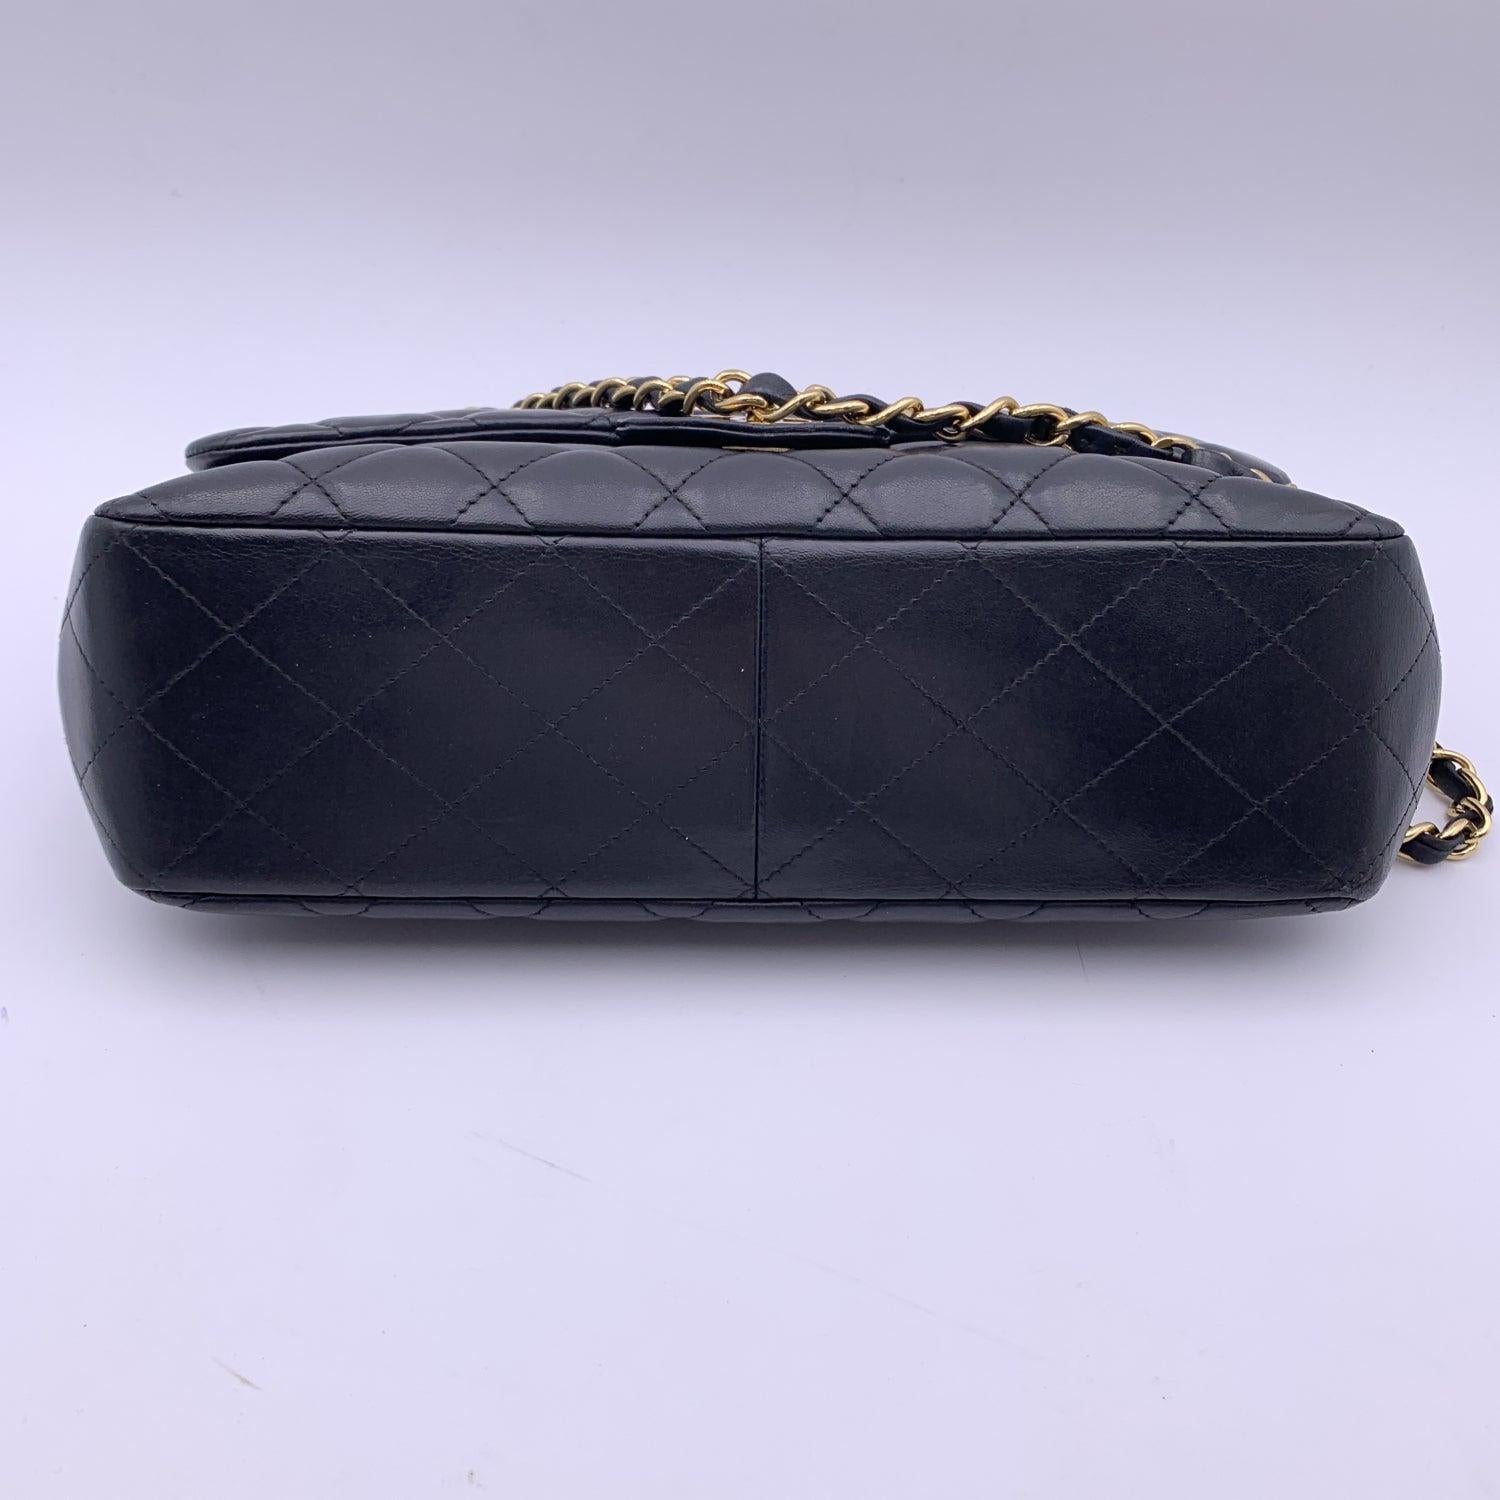 Chanel Black Leather Jumbo Timeless Classic Flap 2.55 Bag 3